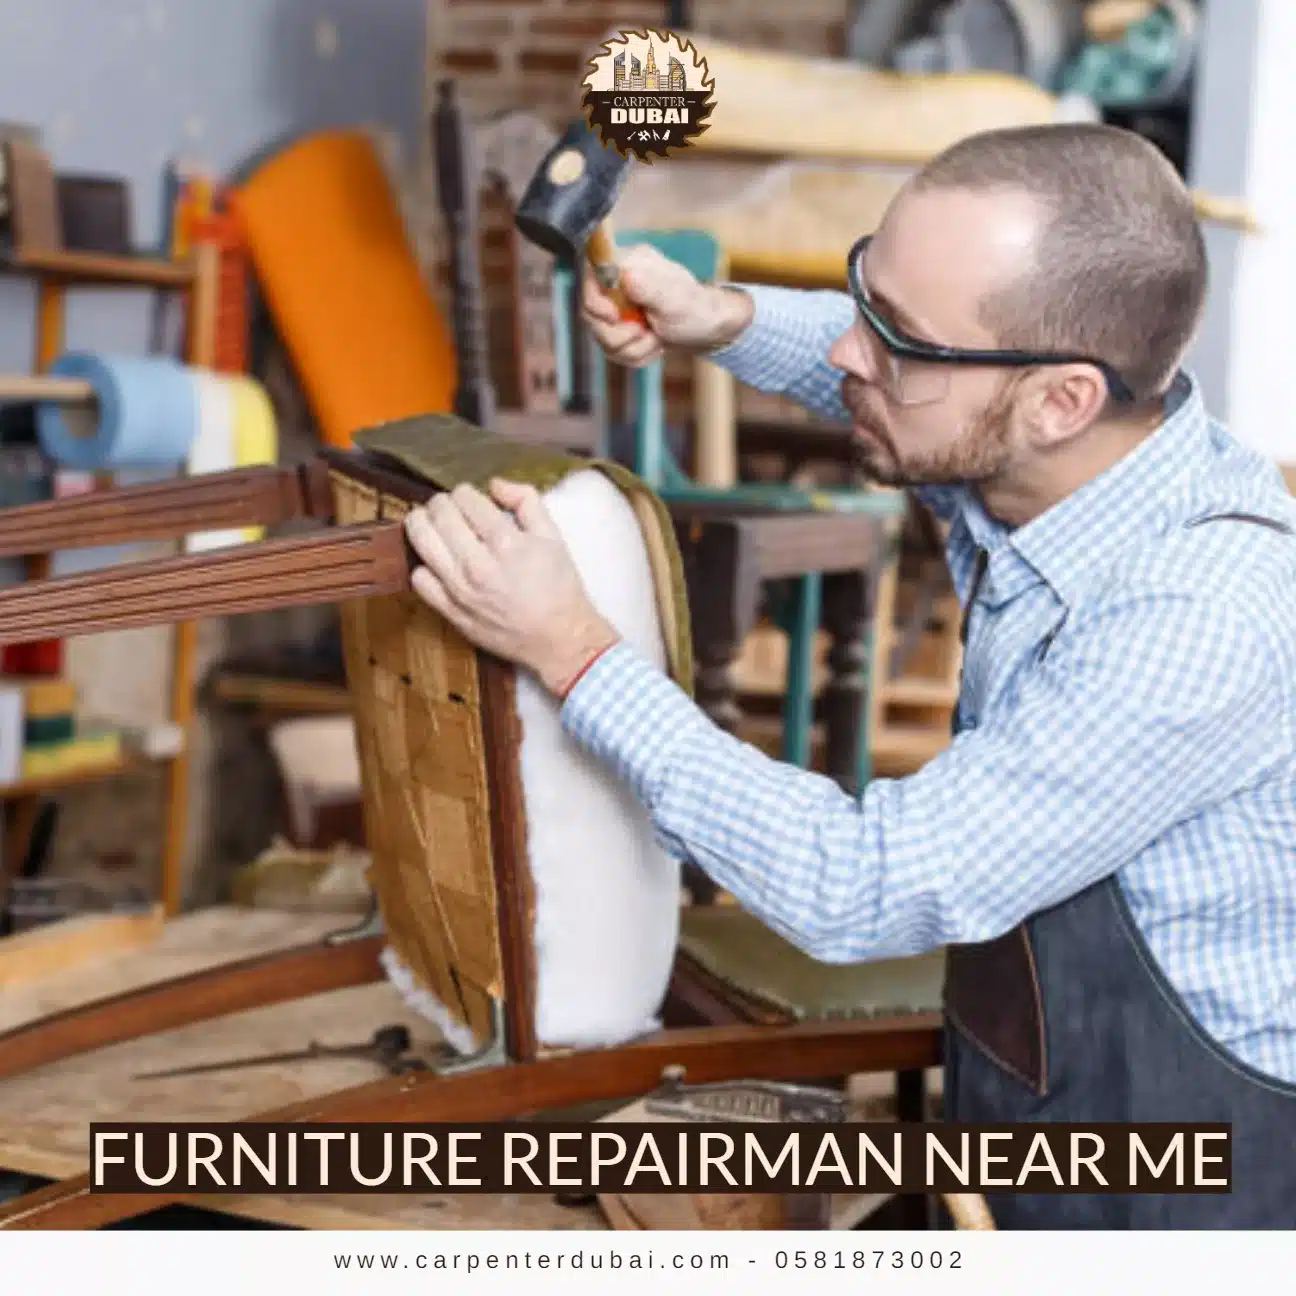 Furniture Repairman near me